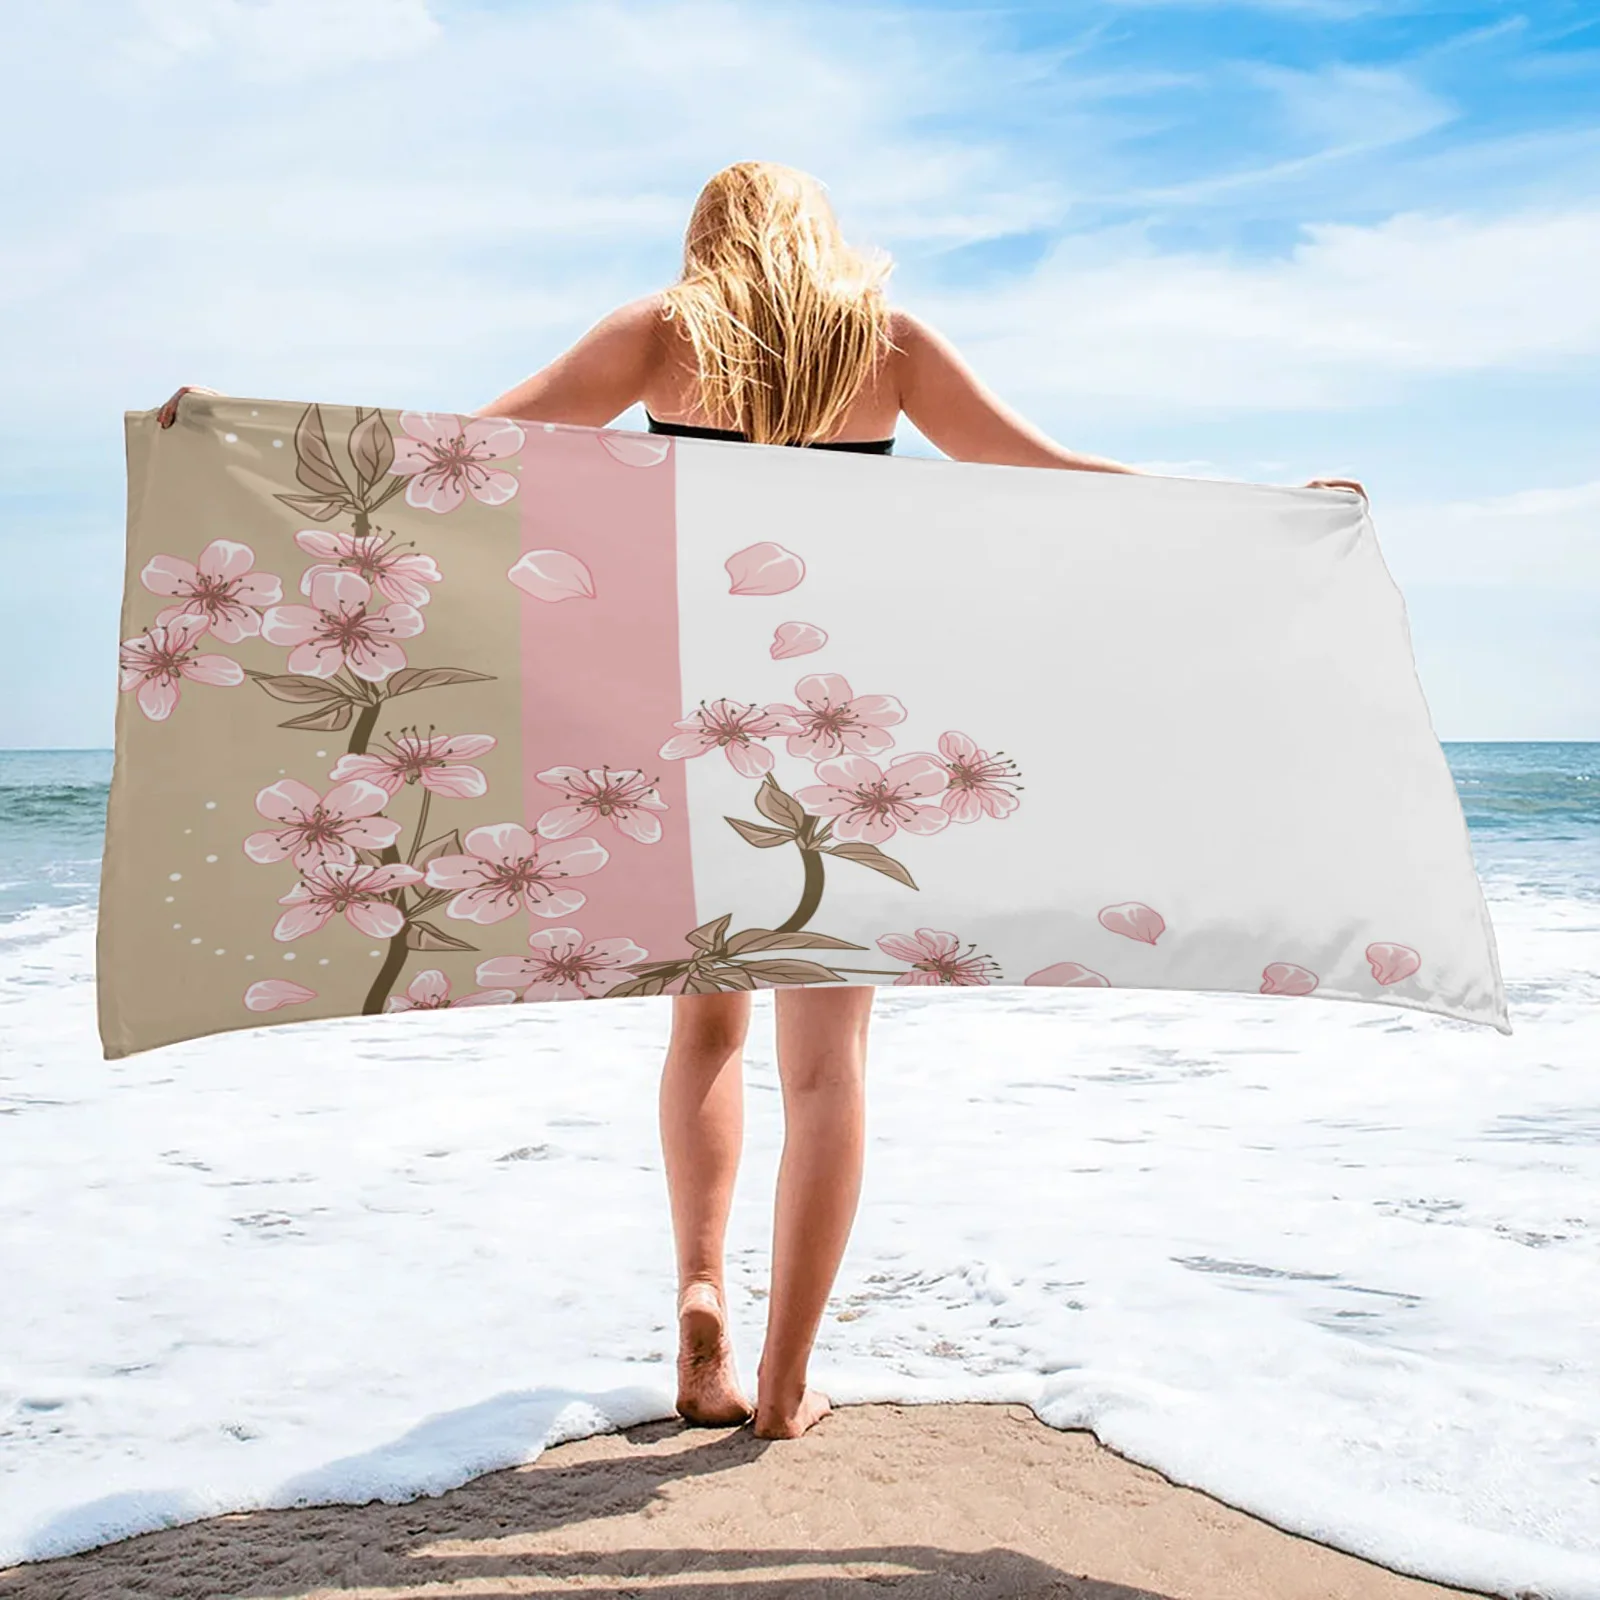 

Peach Blossom Petals Leaves Flower Bath Towel Bathroom Soft Absorbent Towel Microfiber Fabric Beach Towels Home Textile